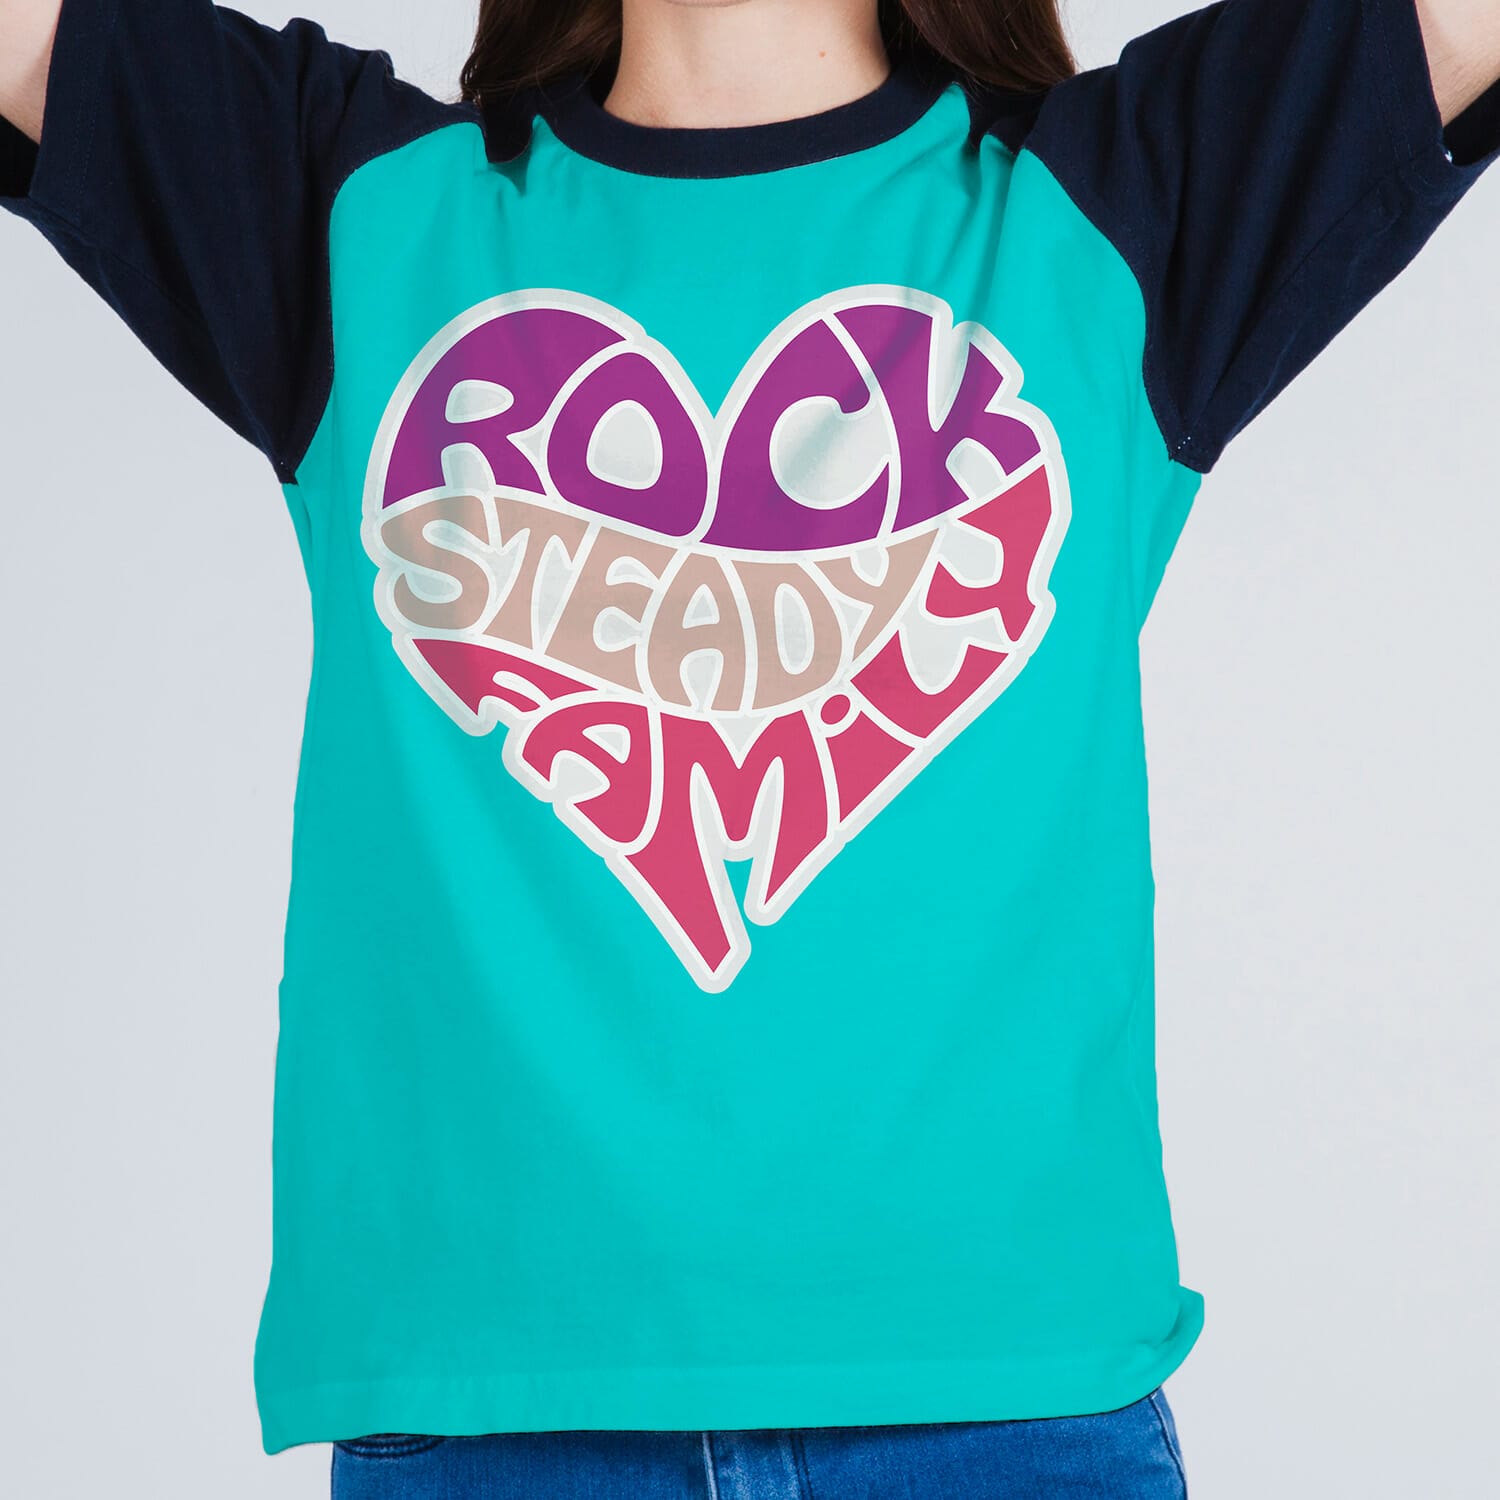 Rock steady family - Heart Shaped tshirt design